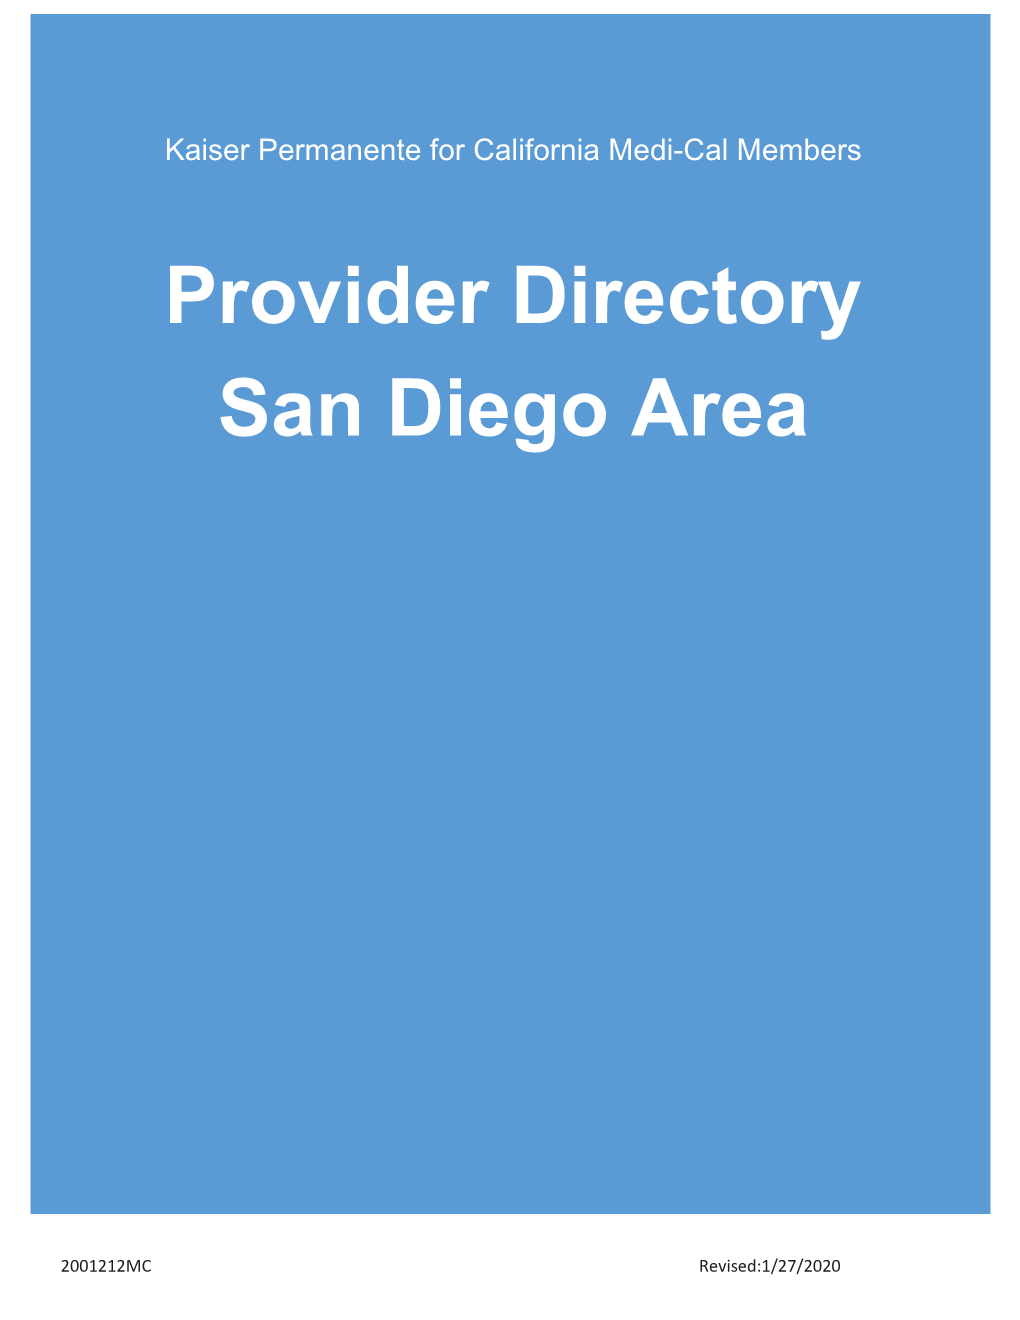 Provider Directory San Diego Area